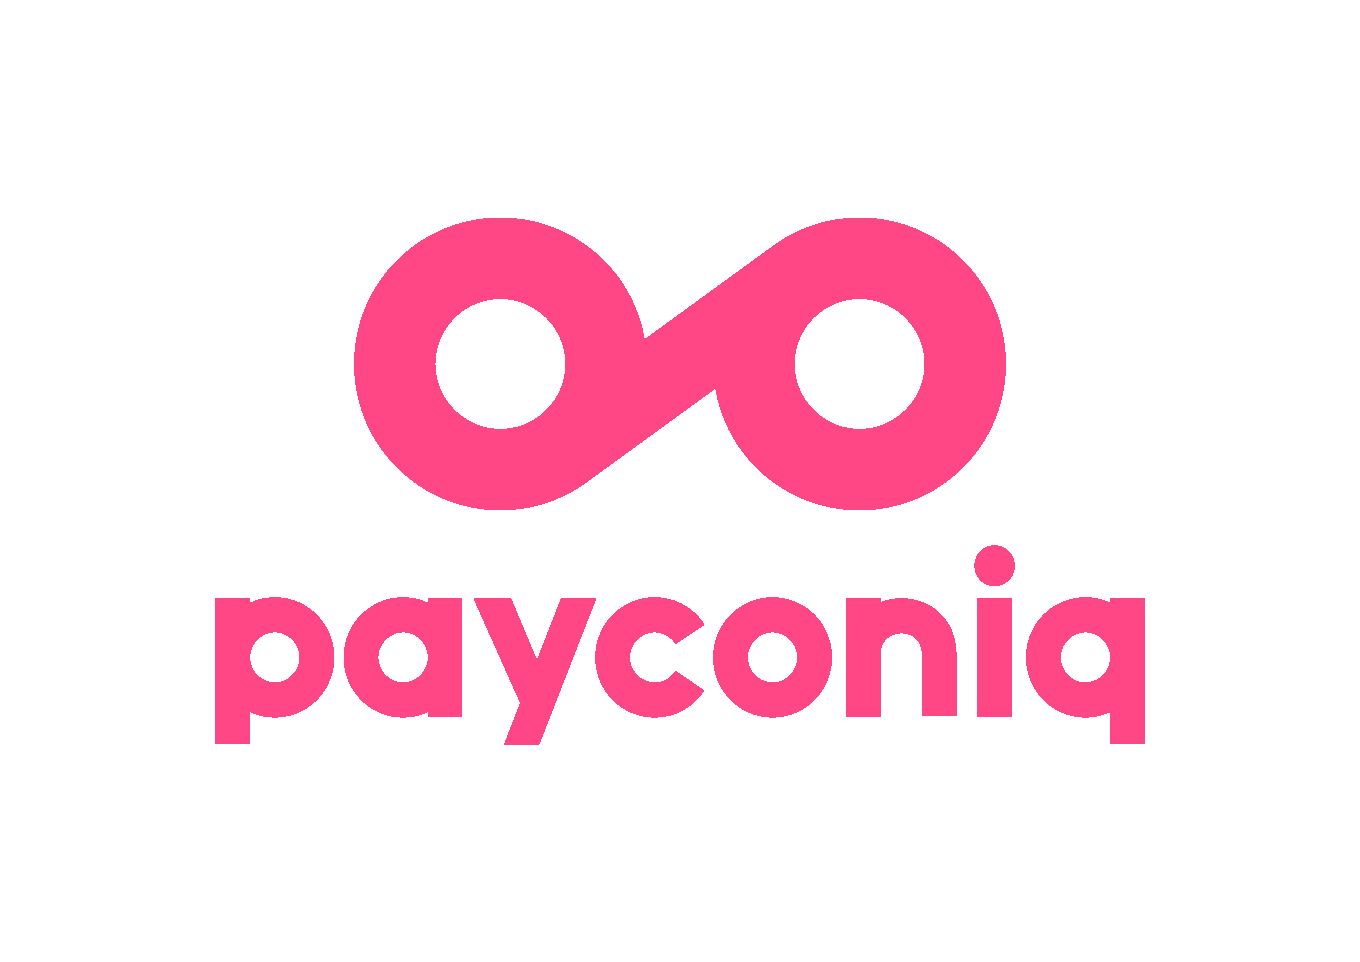 PAYCONIQ logo